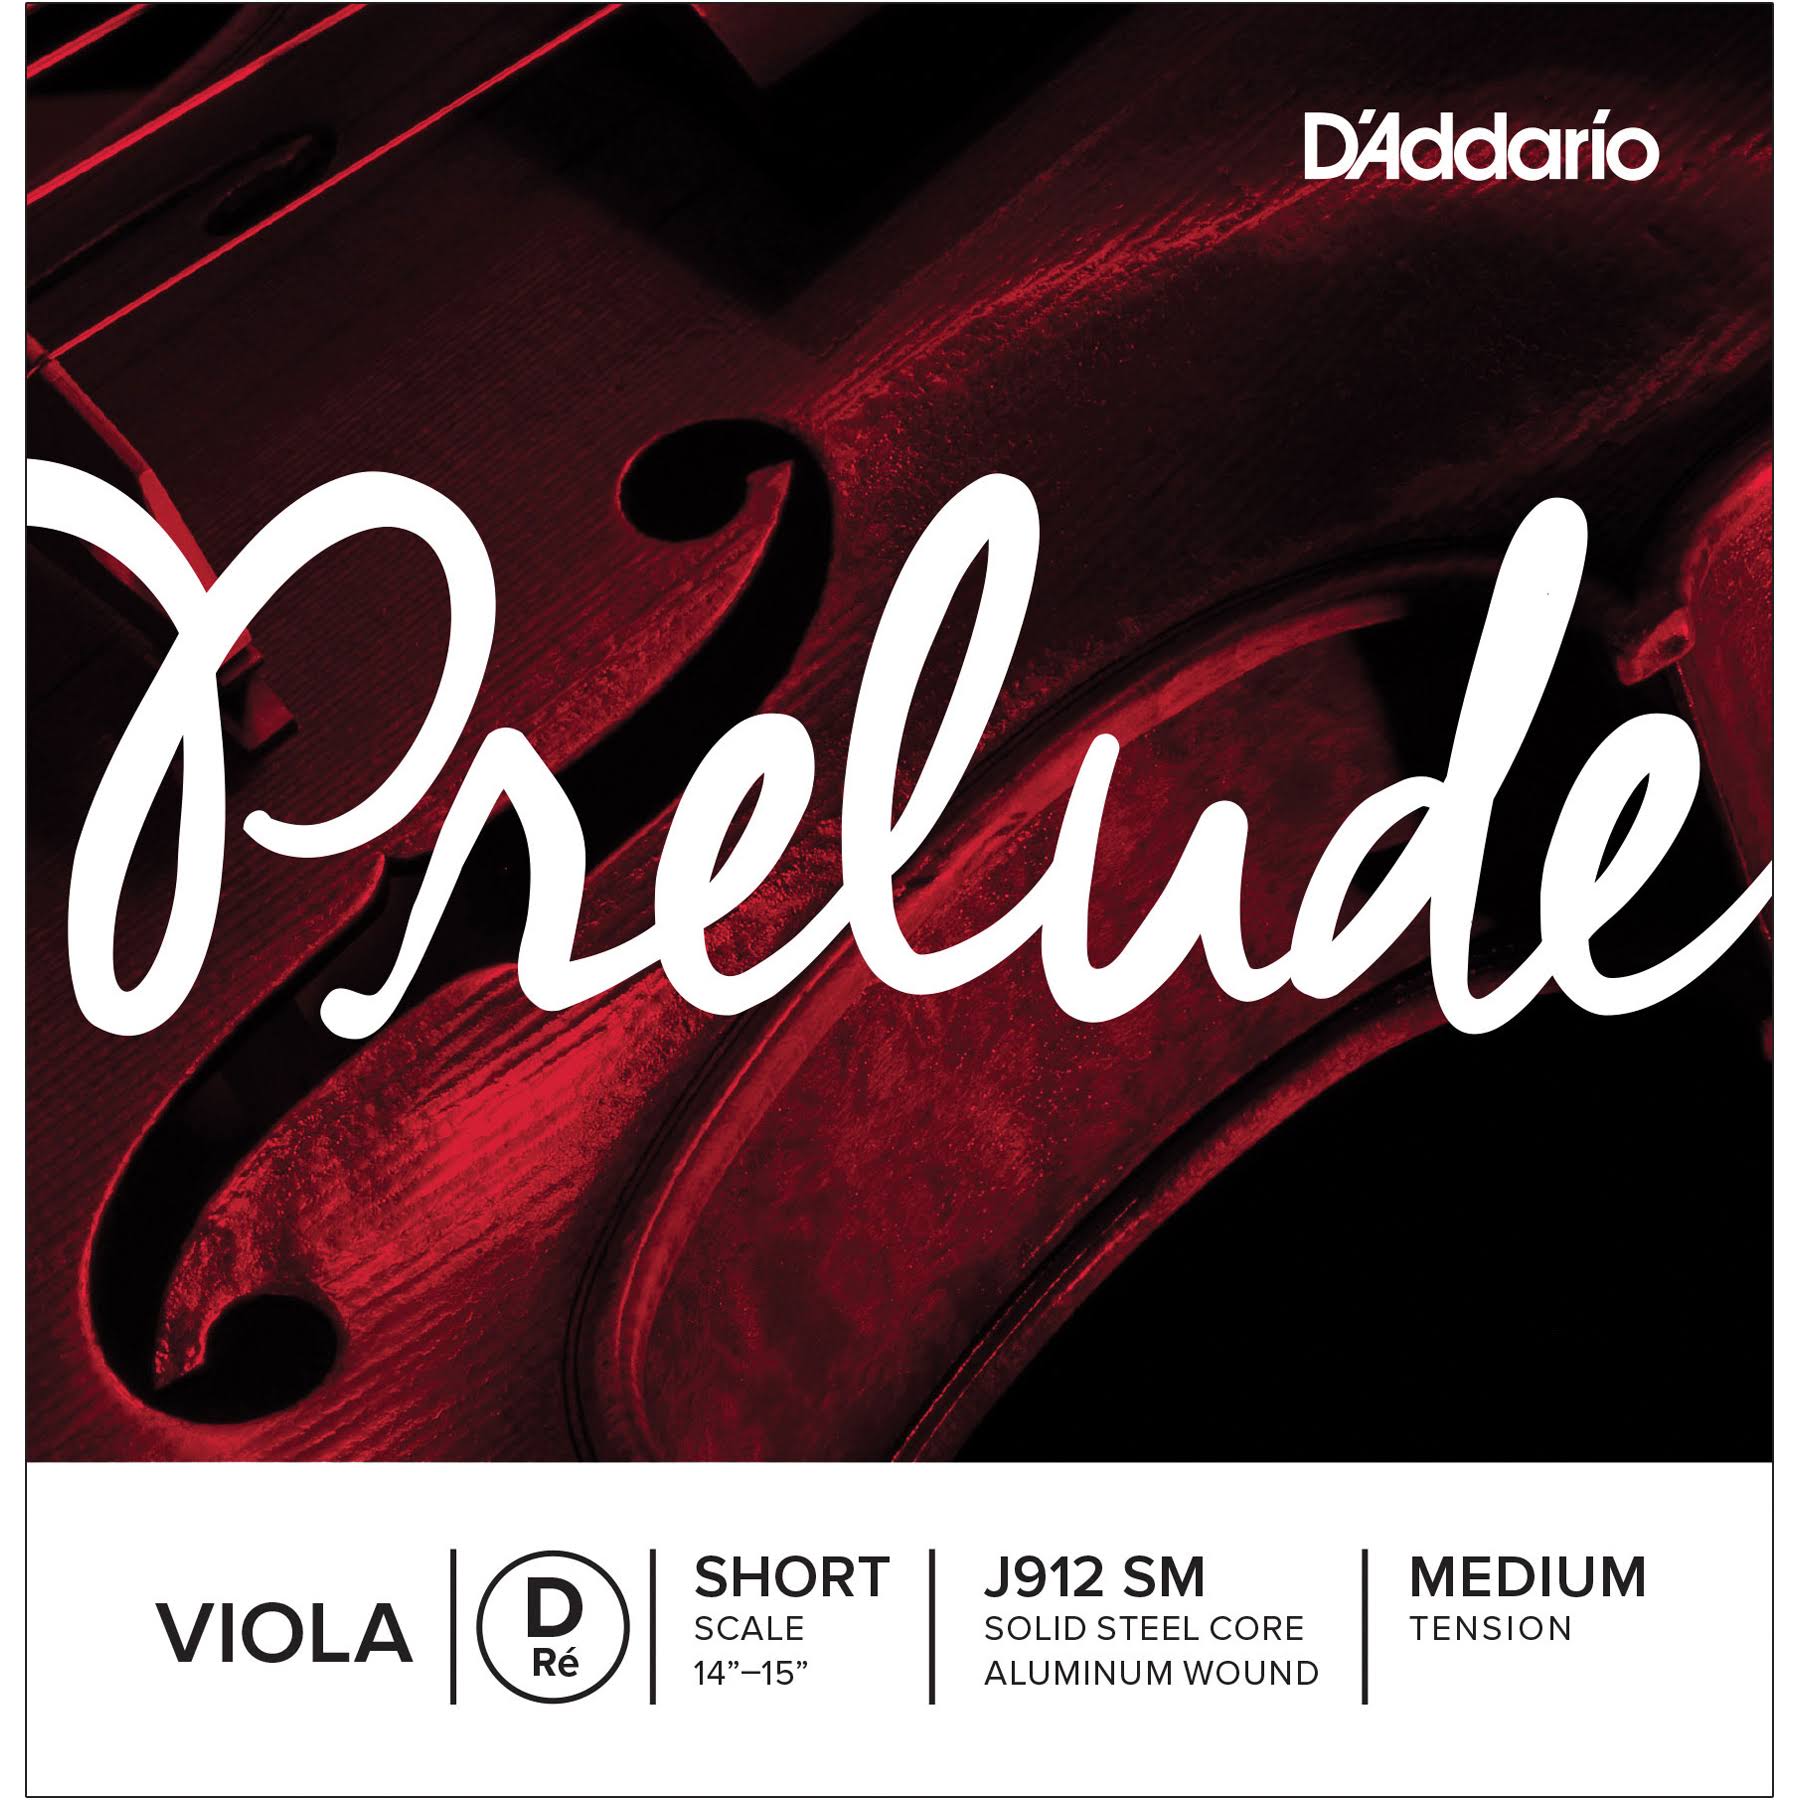 Prelude Viola D Guitar String - Short, Medium, Scale 13" to 15"